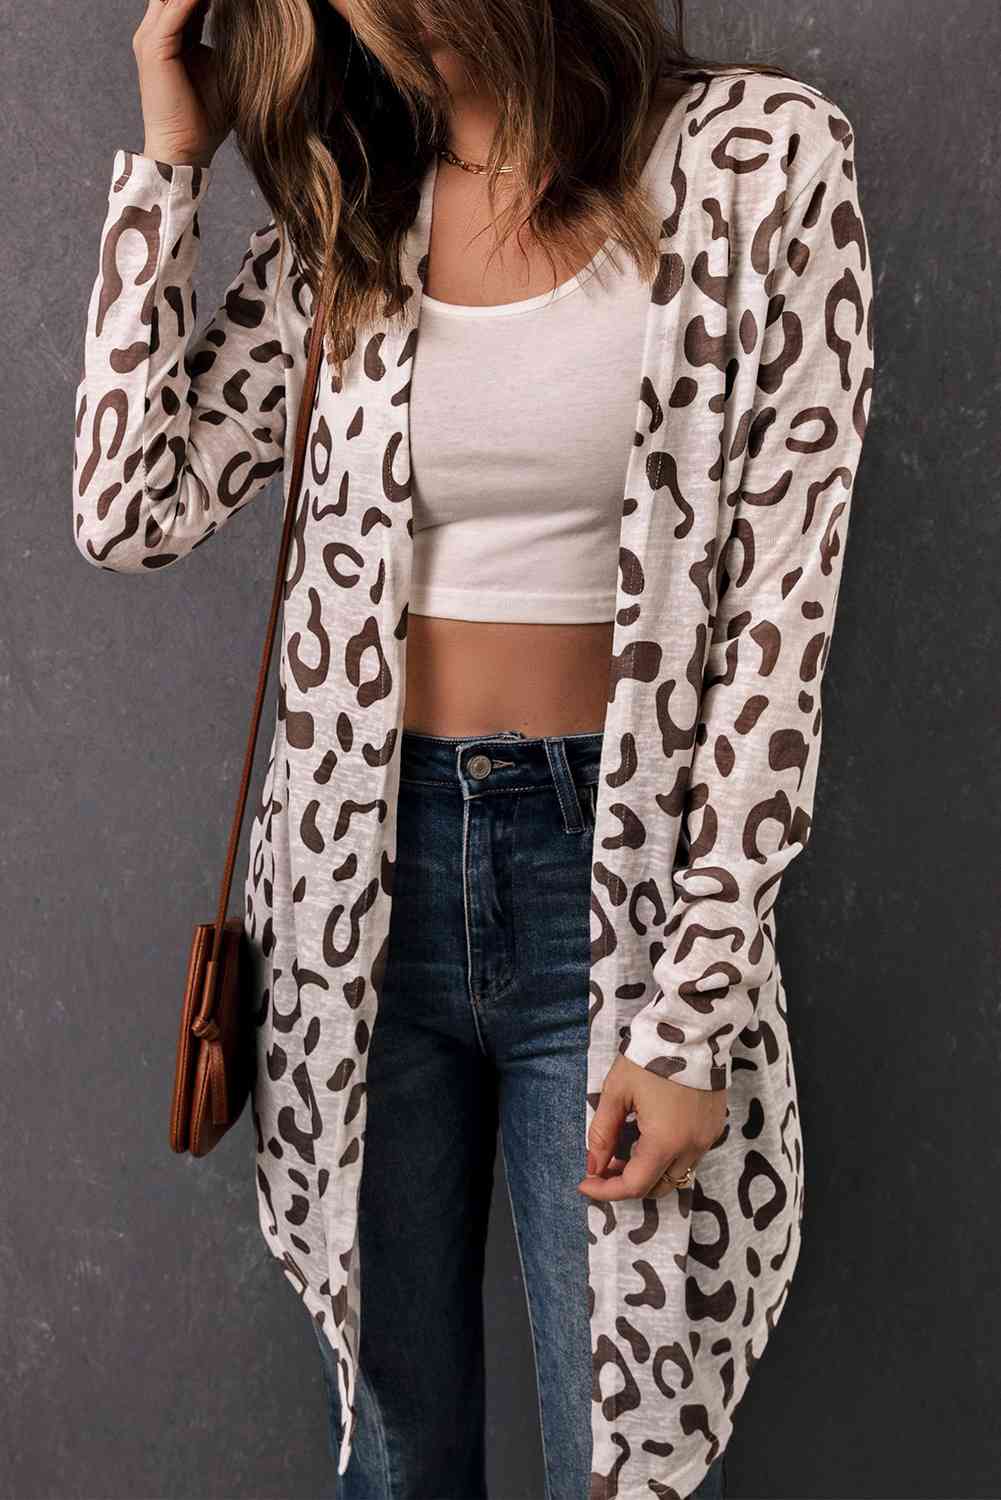 Leopard Print Long-Sleeve Open Front Cardigan